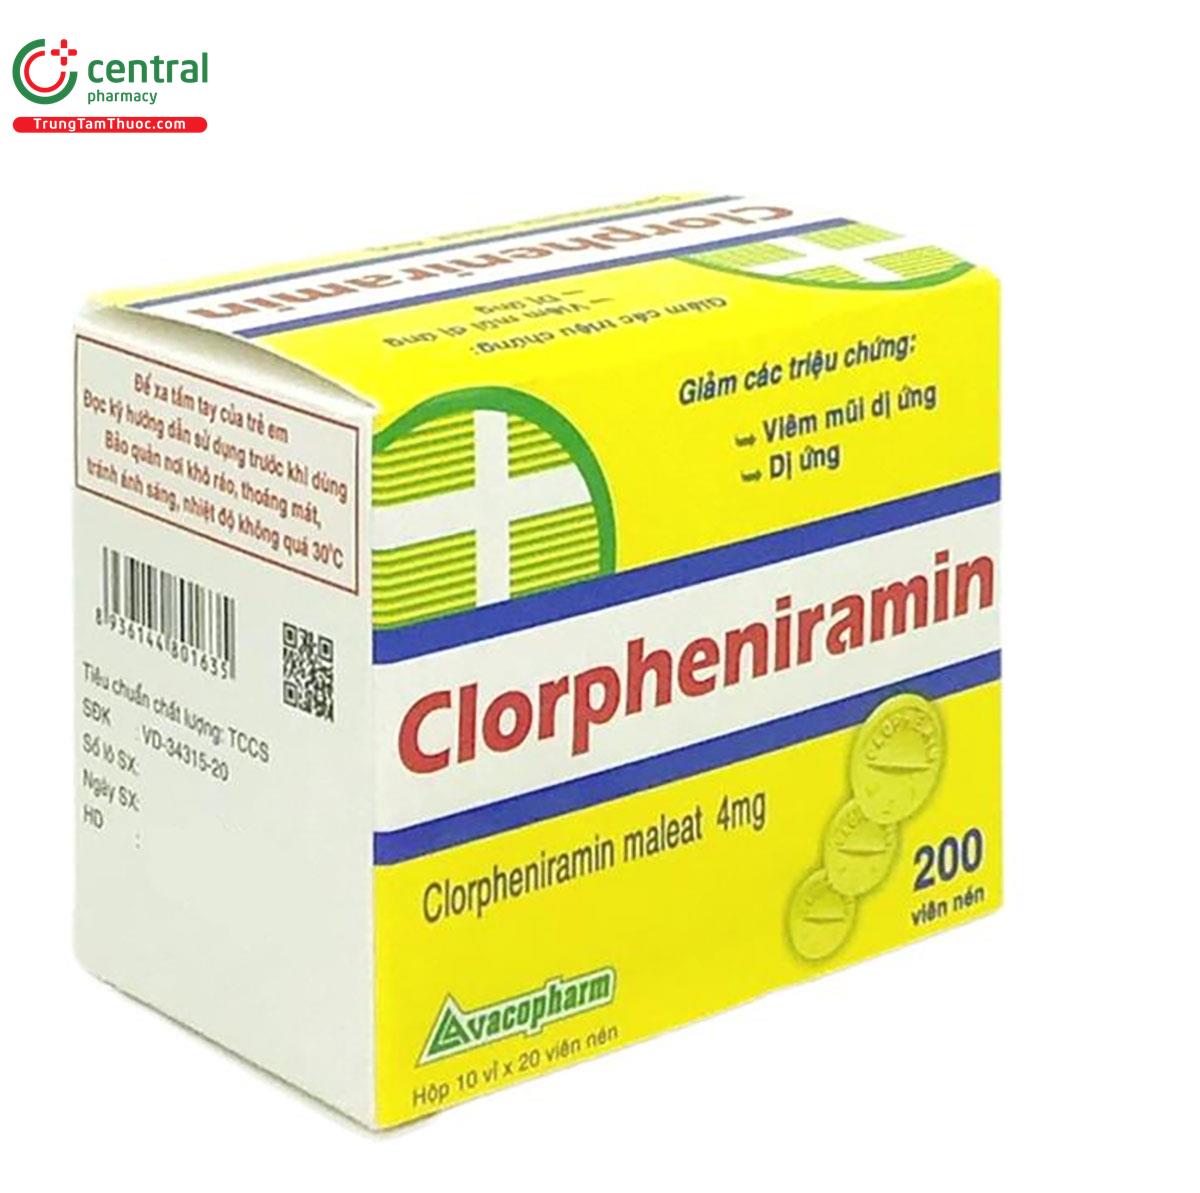 clorpheniramin 3 B0567